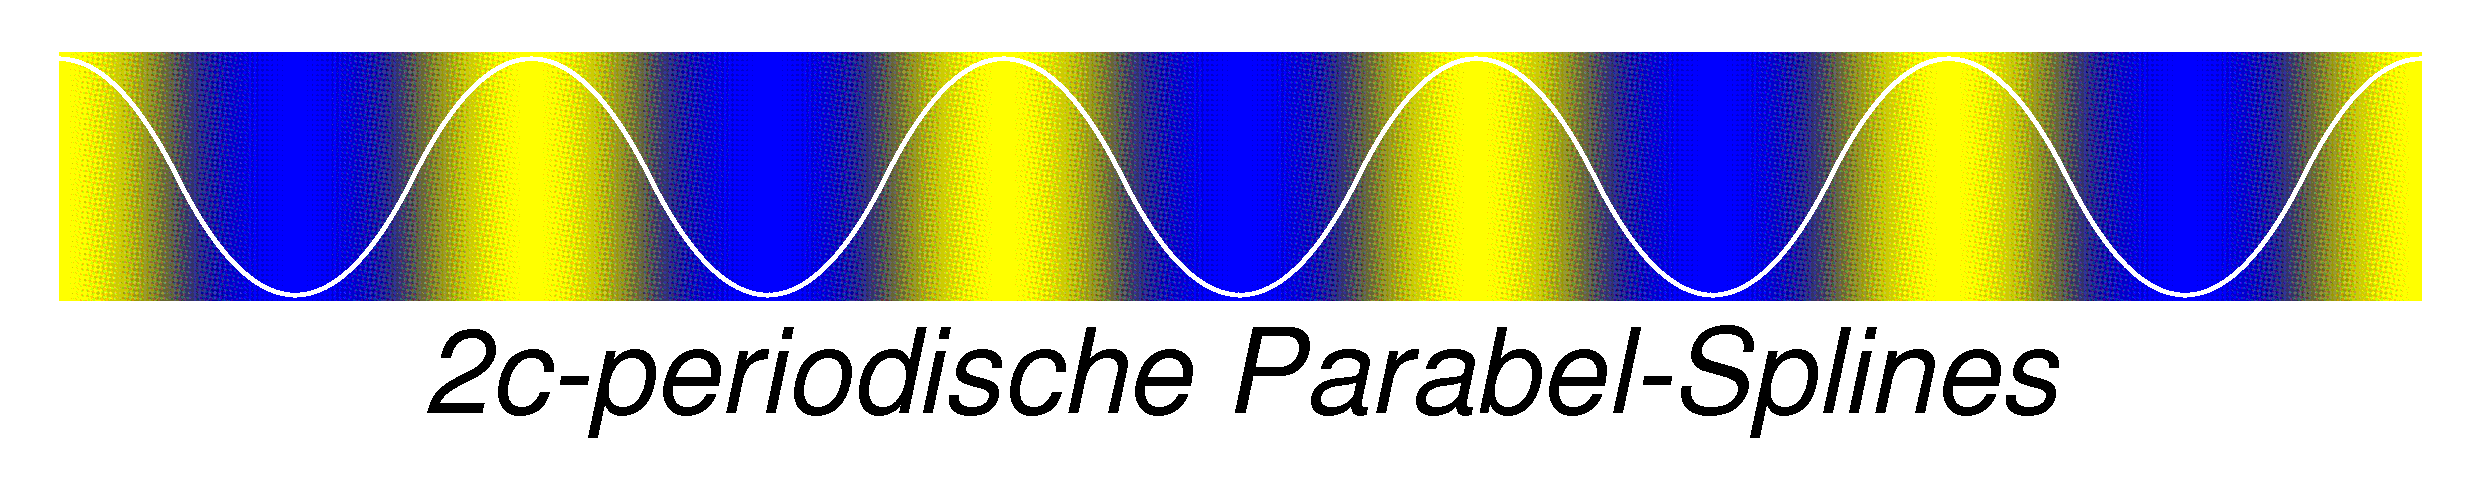 Modifier 'Parabel-Splines'